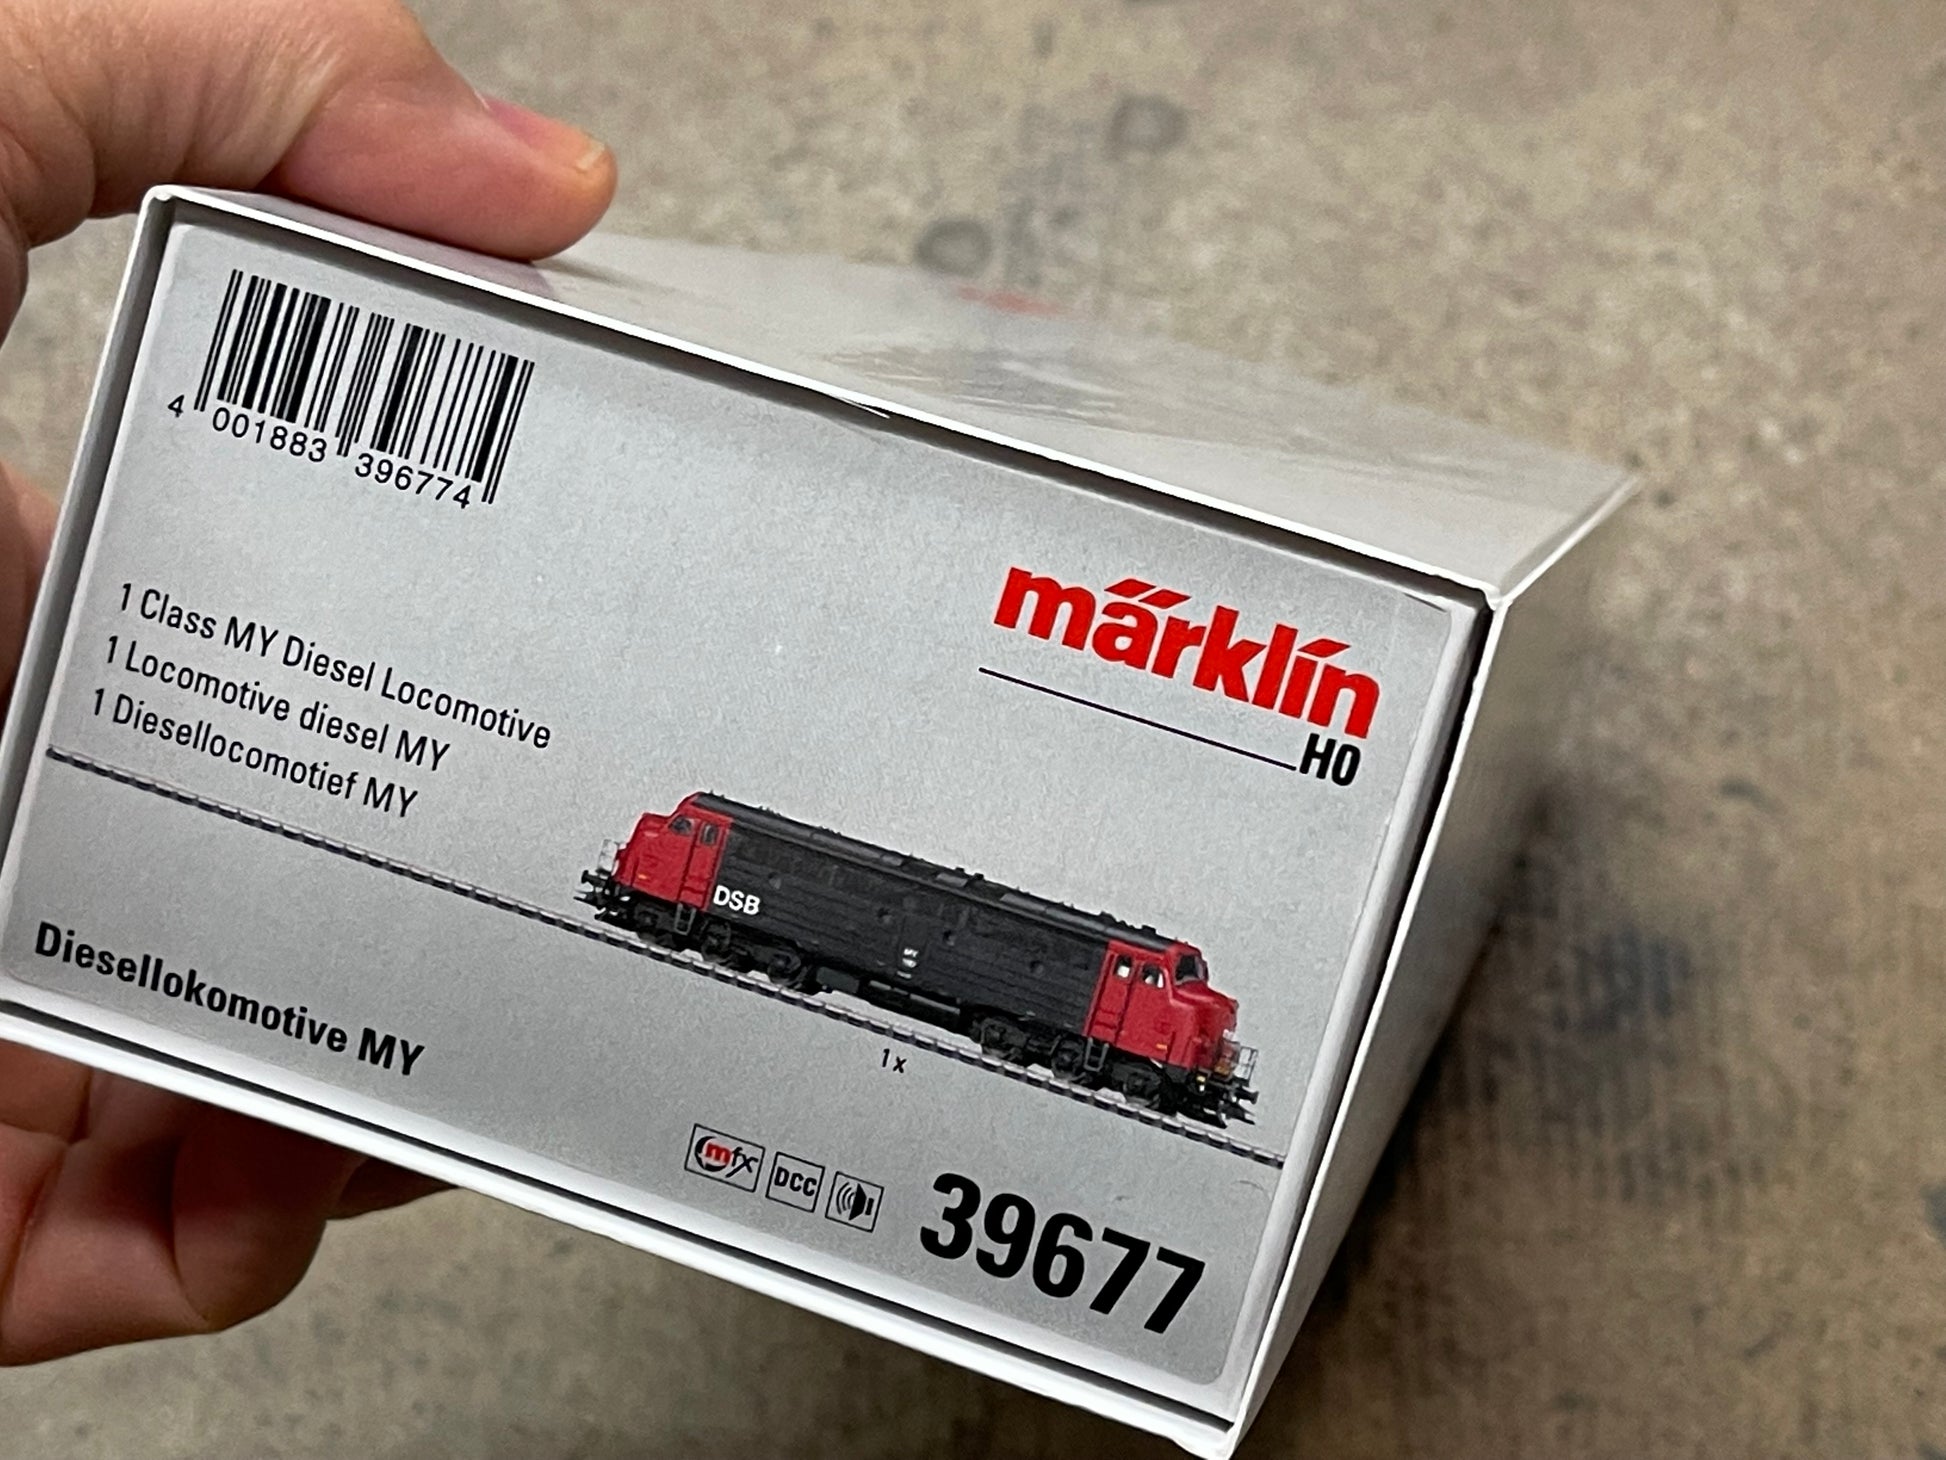 Marklin 39677 - Class MY Diesel Locomotive at Ajckids.com